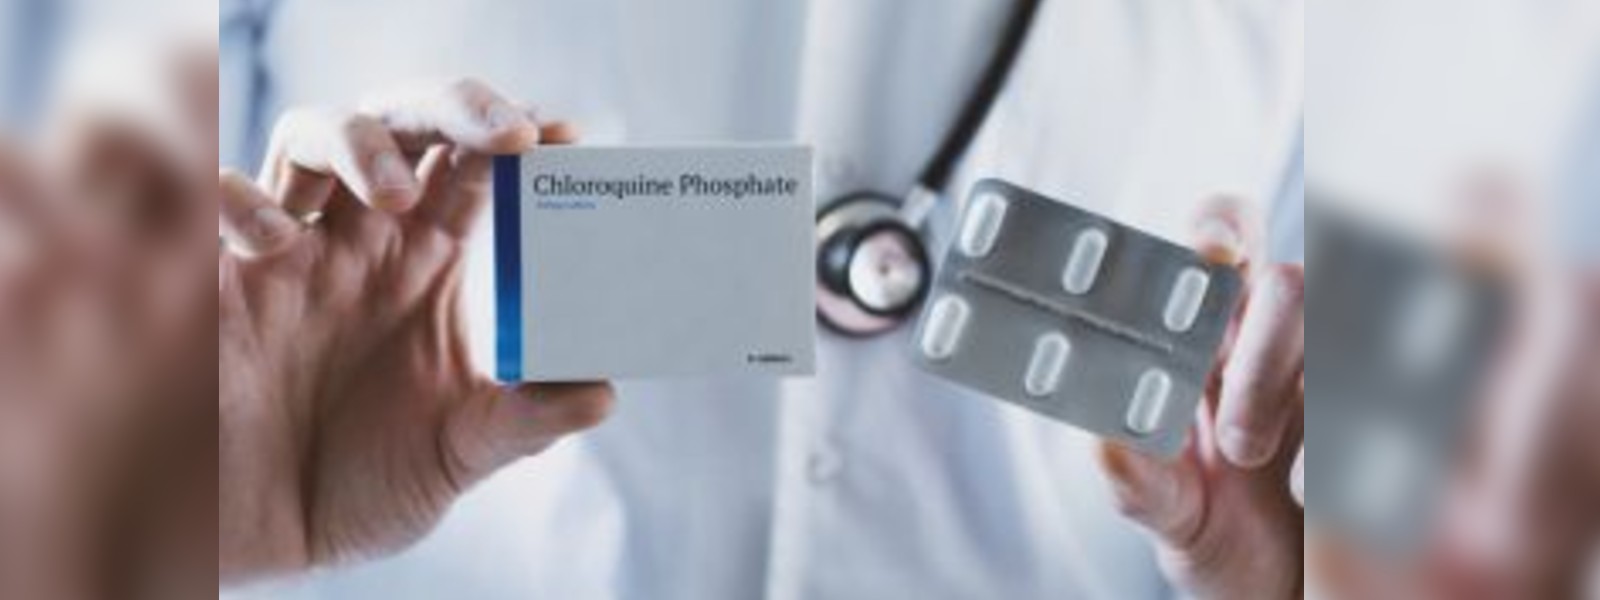 Chloroquine for COVID patients under prescription